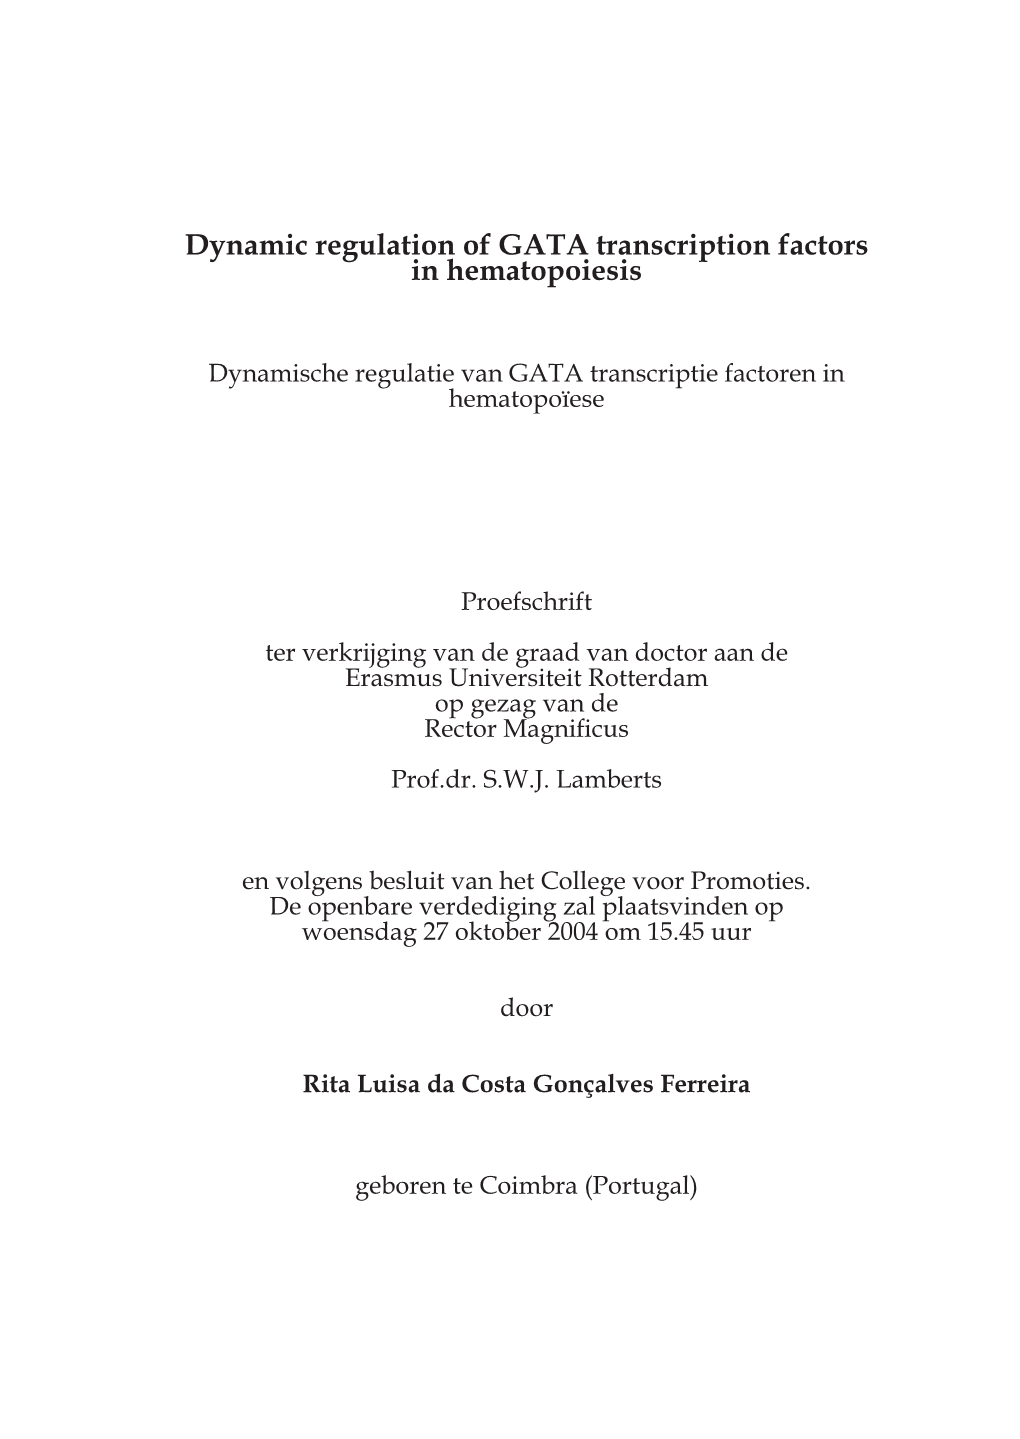 Dynamic Regulation of GATA Transcription Factors in Hematopoiesis